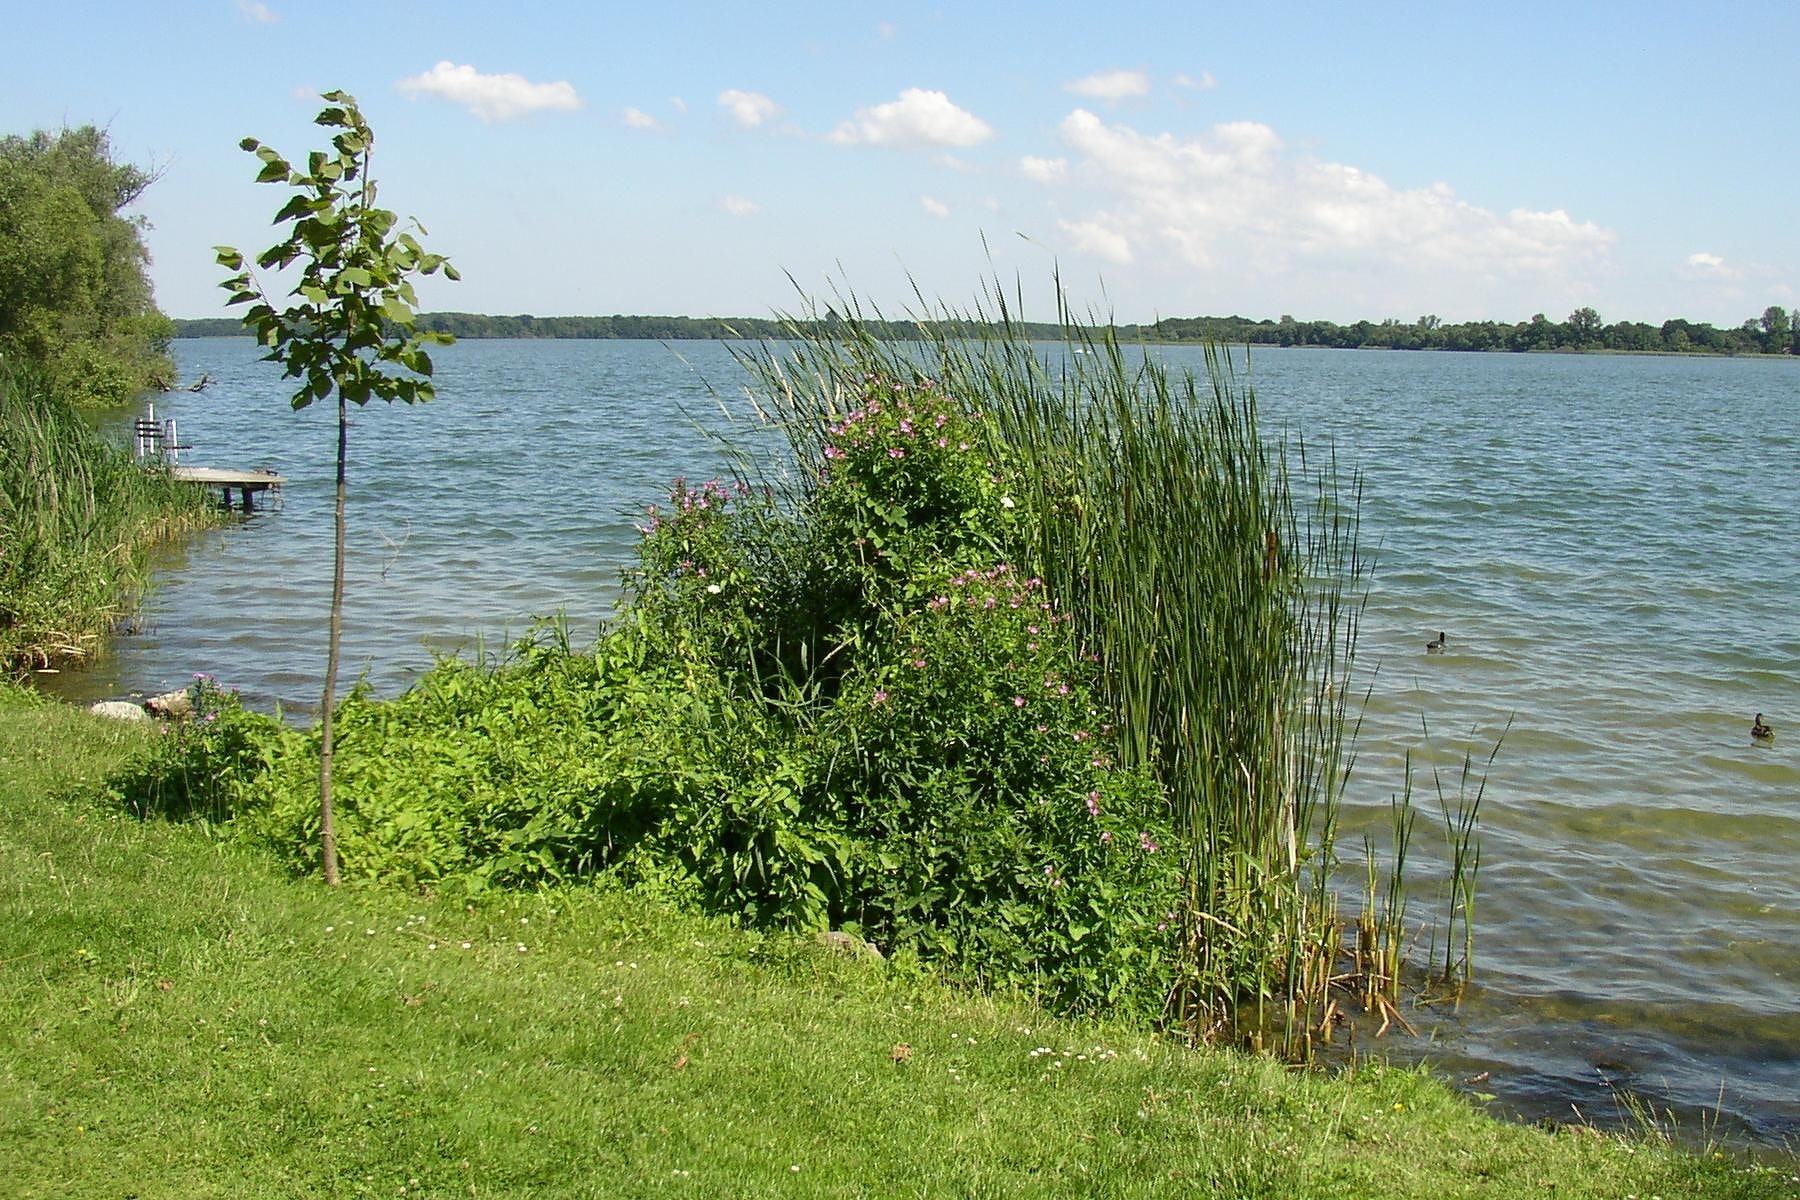 Biosphärenreservat Schaalsee, Deutschland